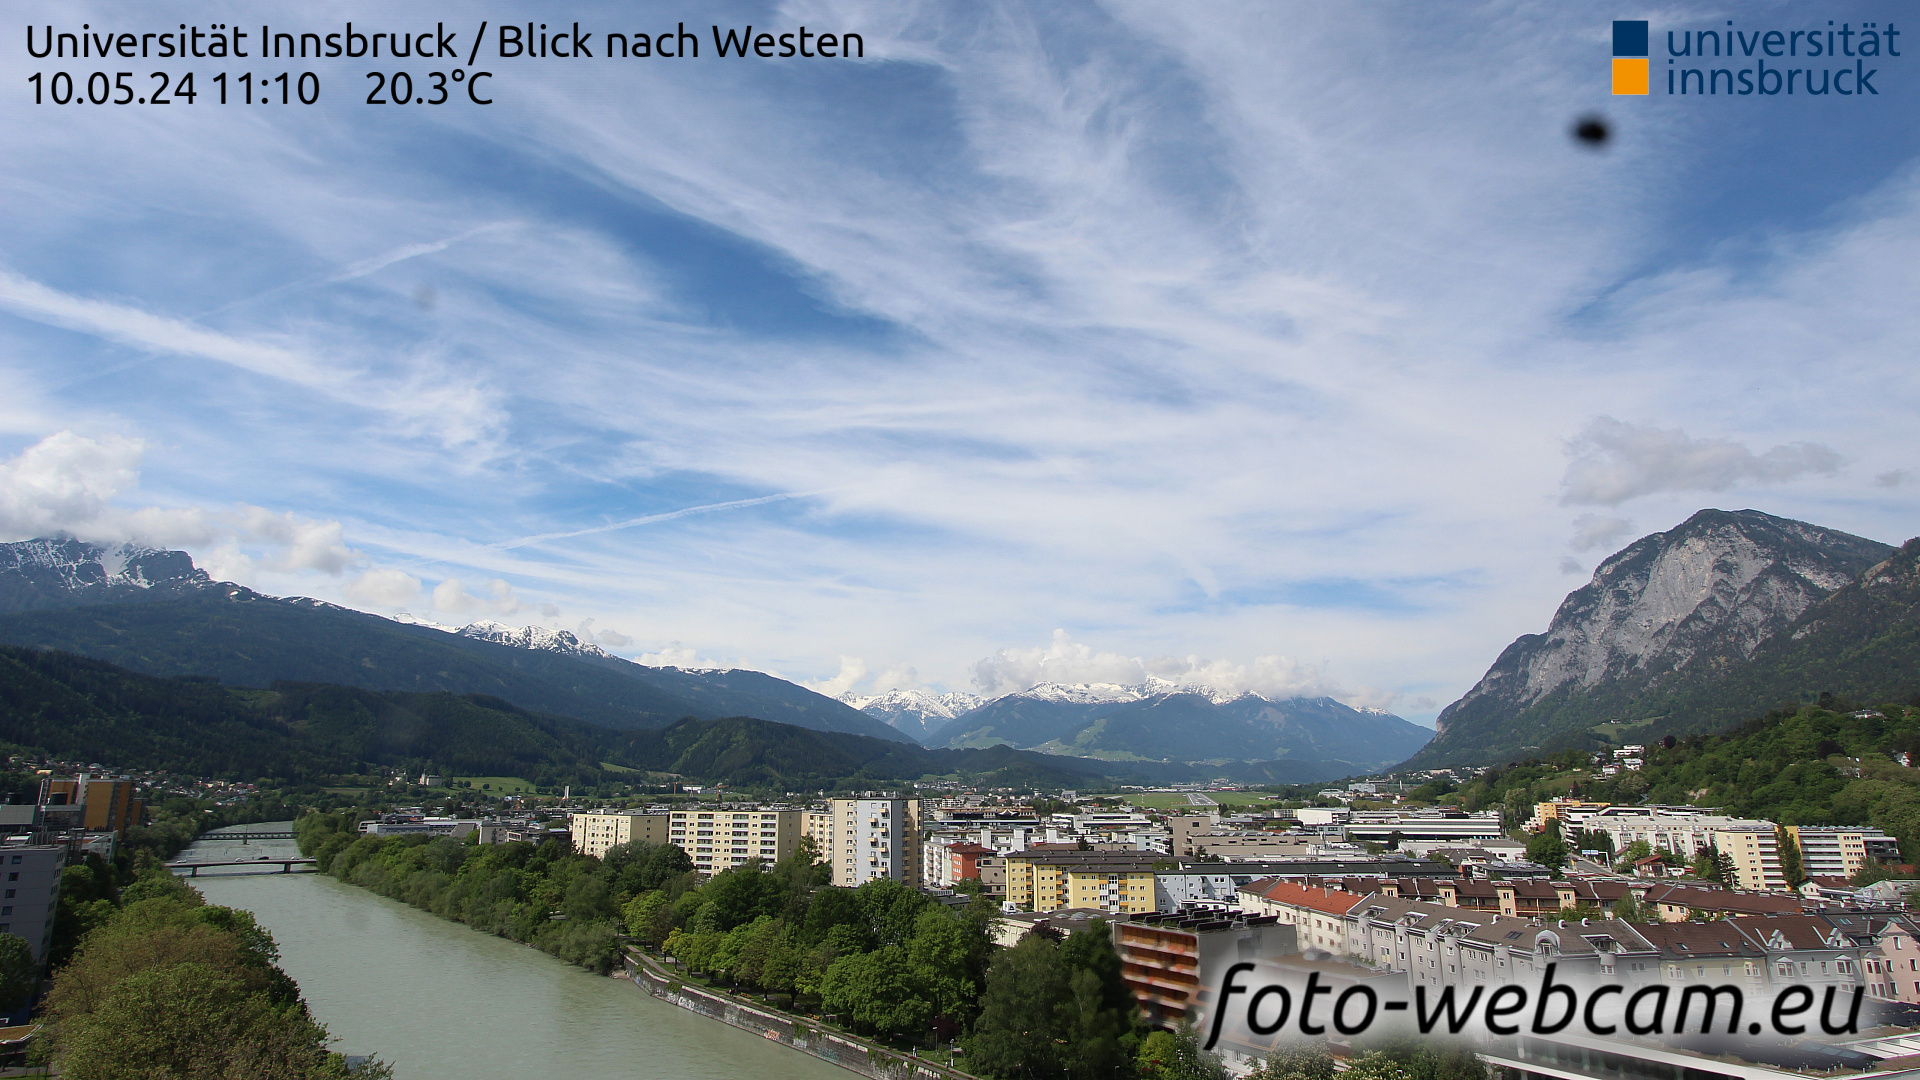 Innsbruck Fr. 11:17